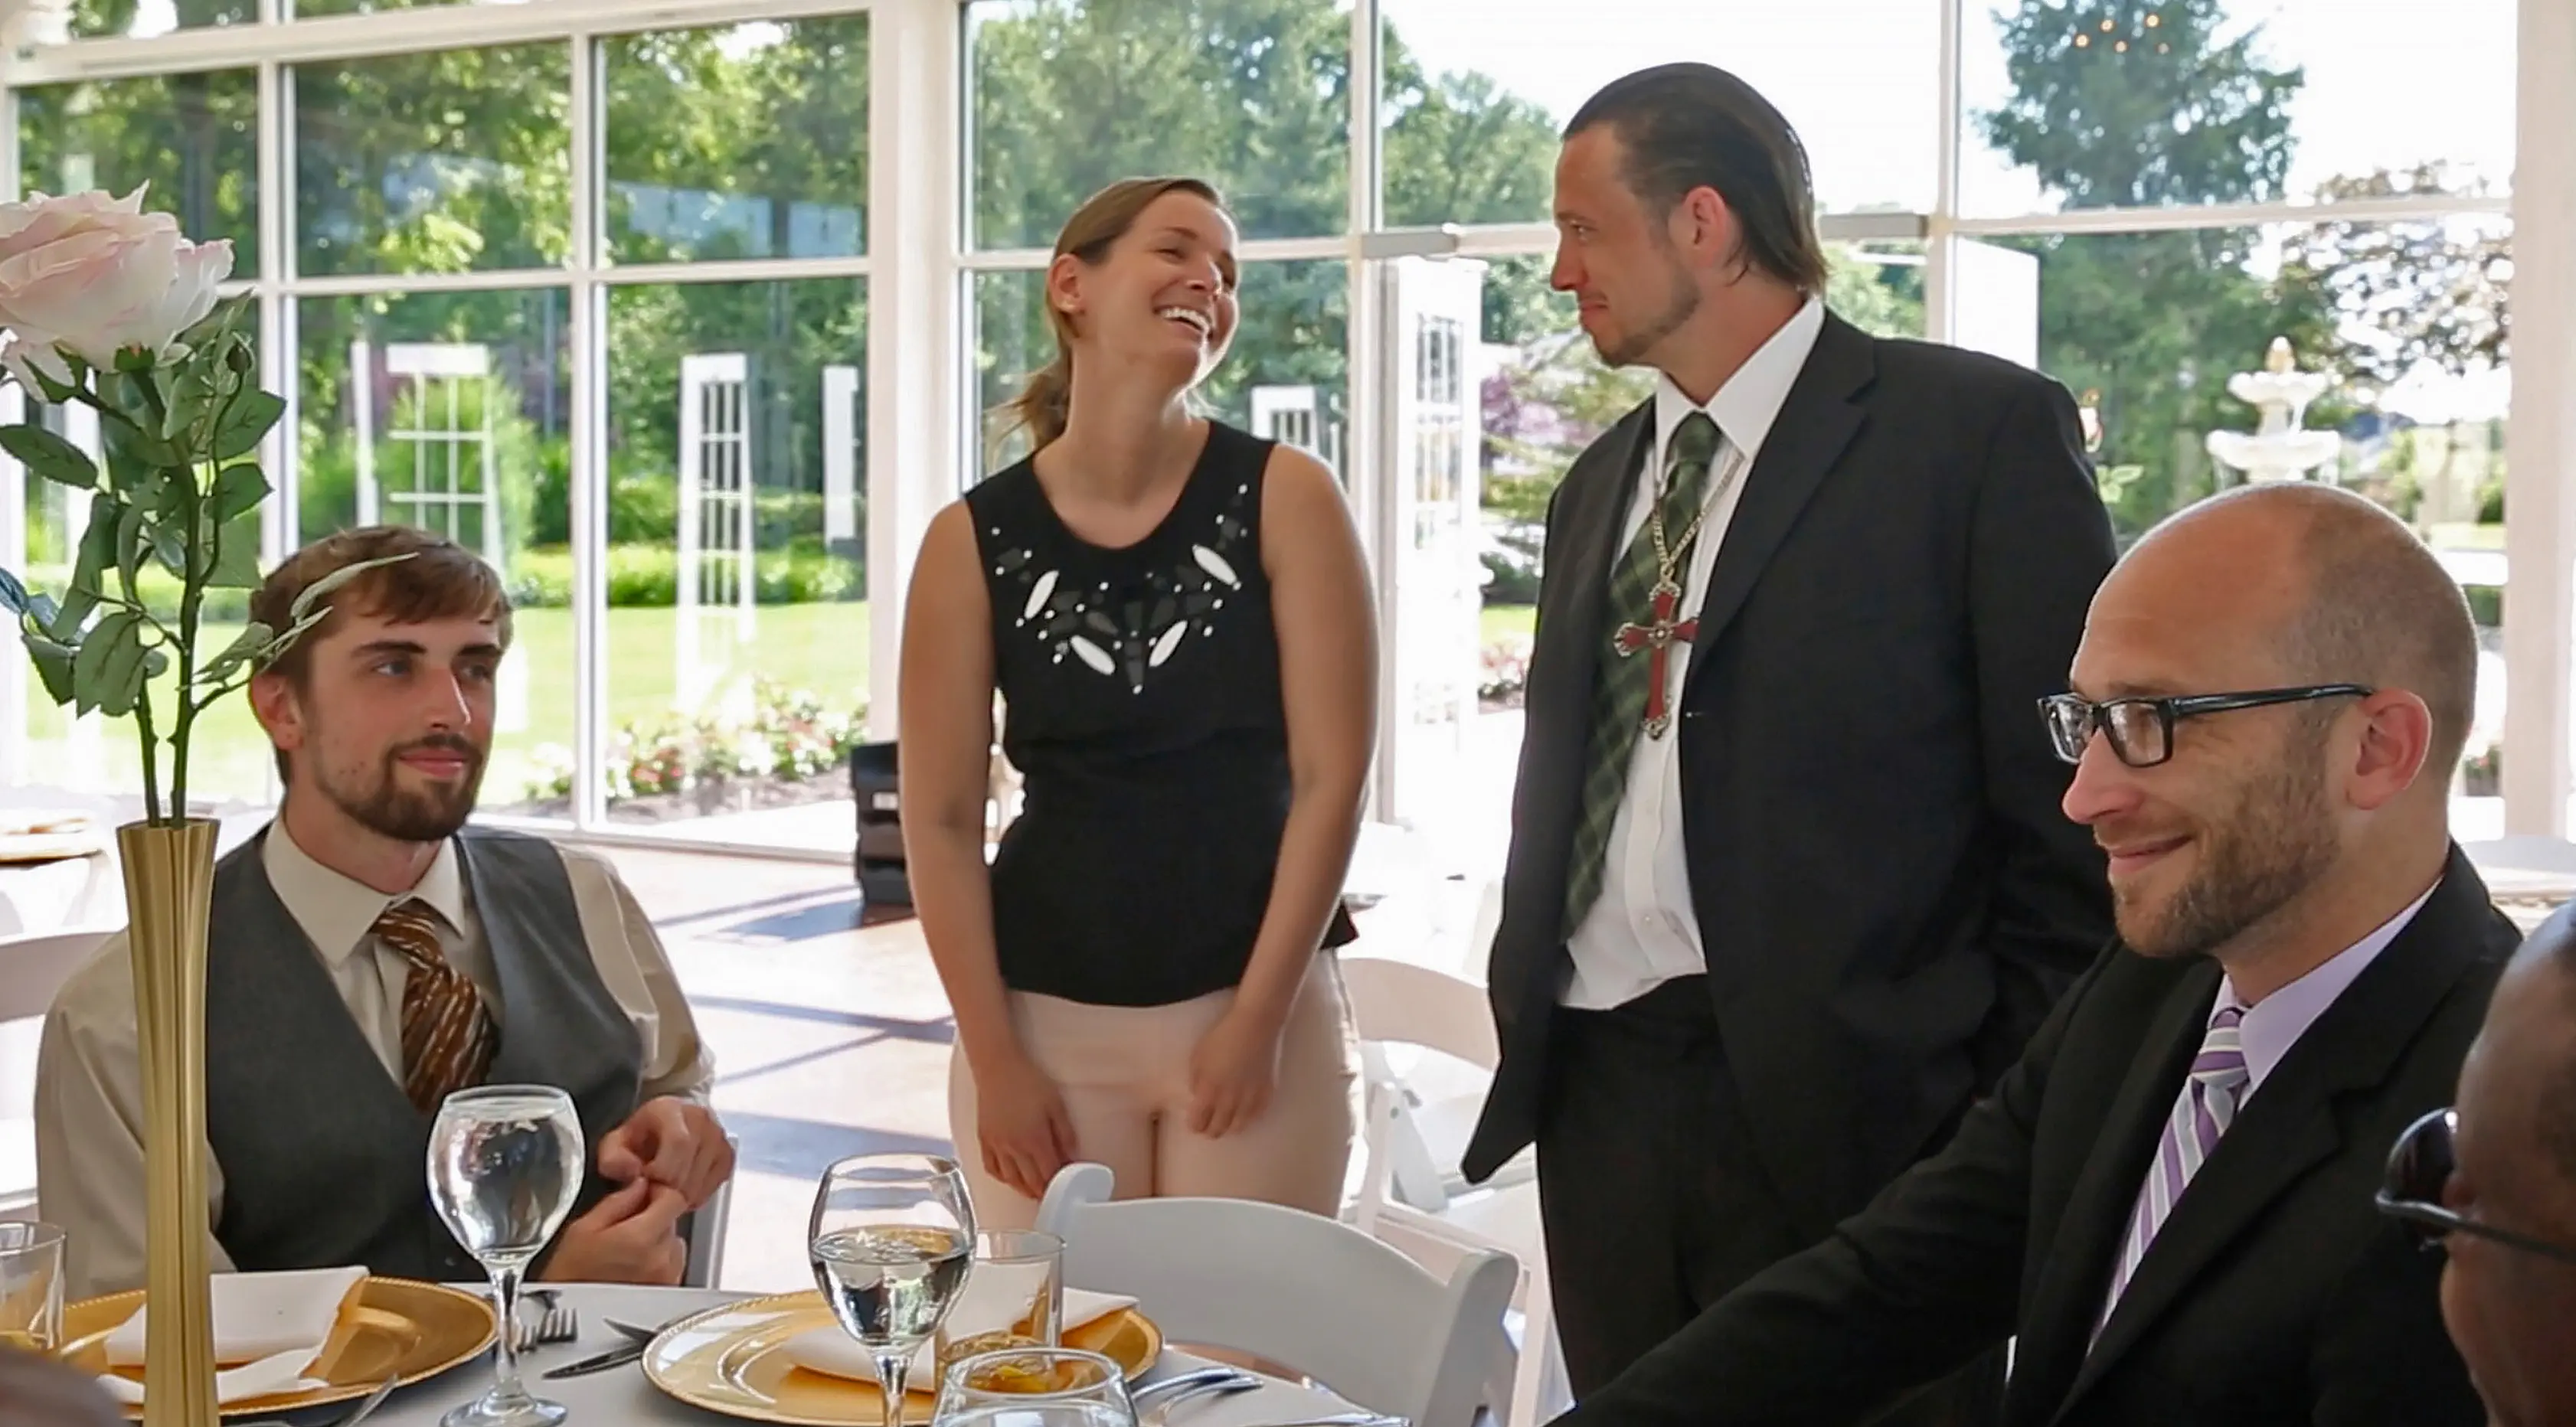 Sarah Cummins berbincang dengan pria dari Wheeler Mission di Ritz Charles, 15 Juli 2017. Cummins batal menikah dan menyumbangkan dana pernikahannya sebesar Rp 398 juta untuk menggelar pesta bagi tunawisma. (Kelly Wilkinson/The Indianapolis Star via AP)